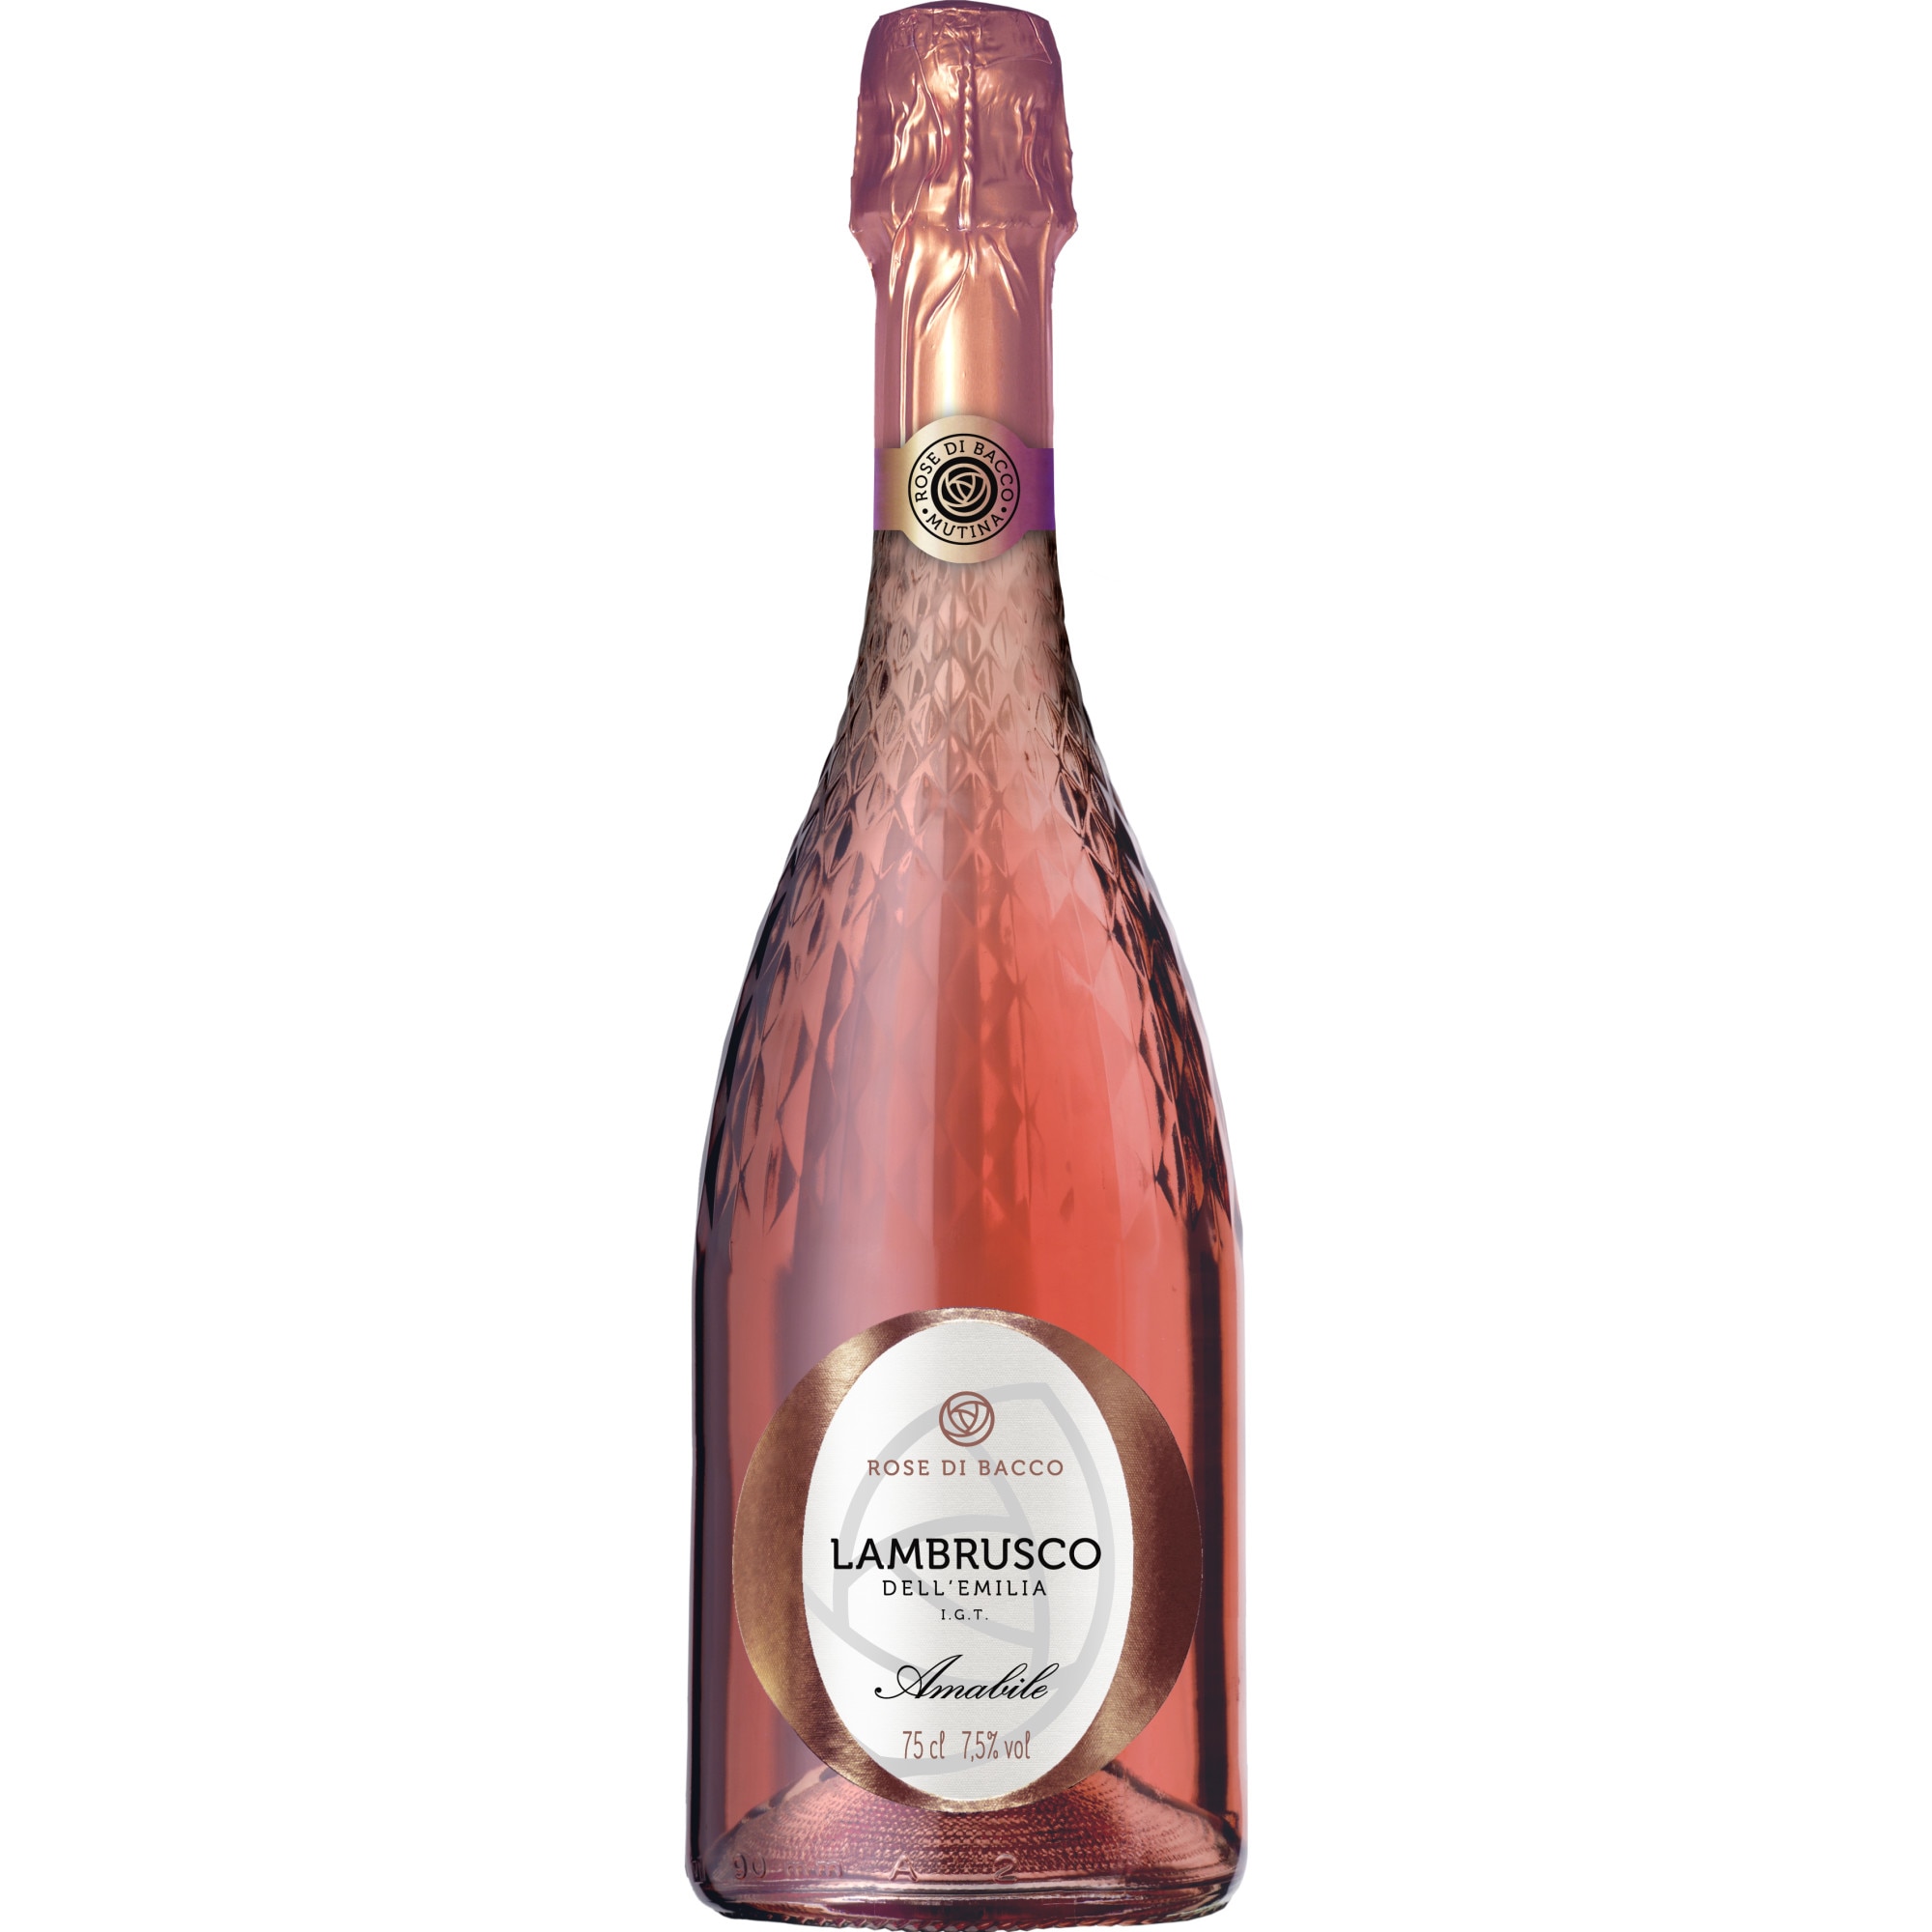 Ламбруско розовое полусладкое. Вино Ламбруско розовое полусладкое. Ламбруско Россо игристое вино. Ламбруско вино игристое розовое. Игристое вино “Lambrusco” , 750 мл.